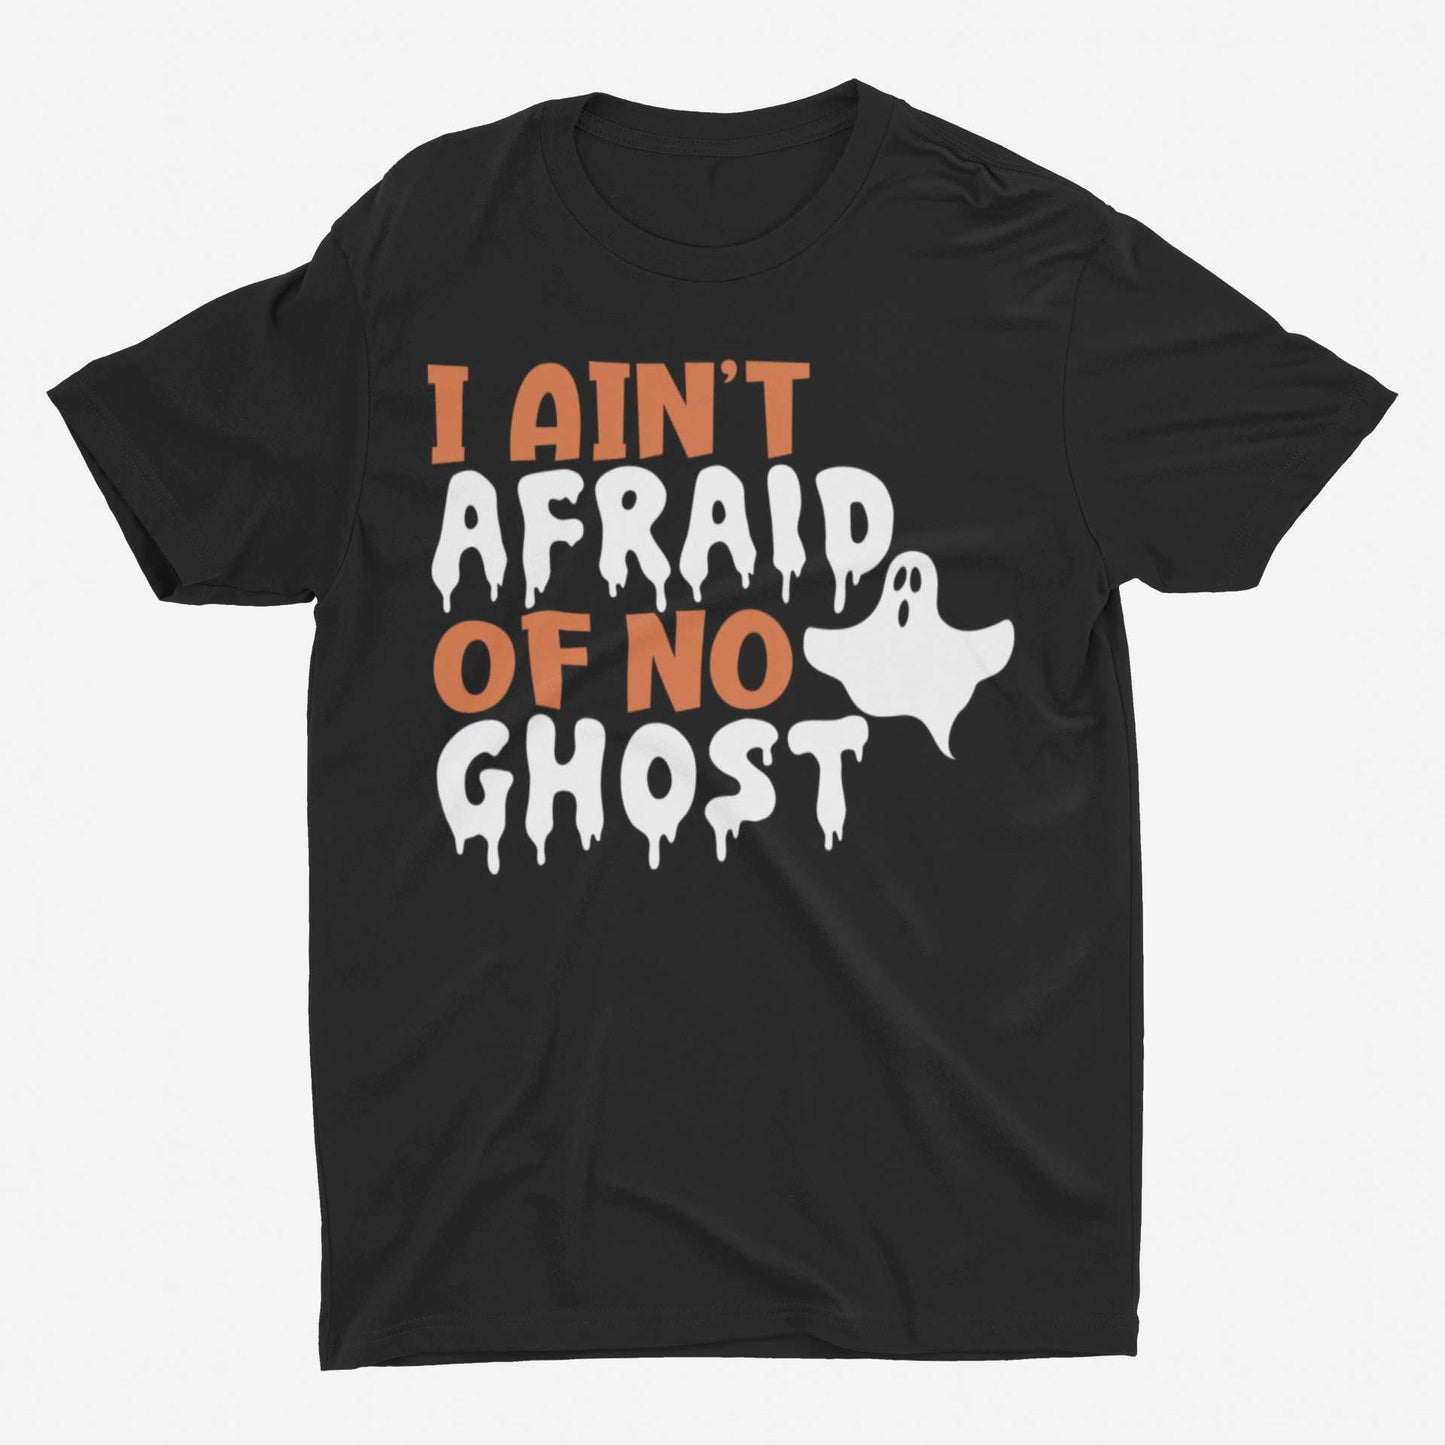 I Ain't afriad of no ghost